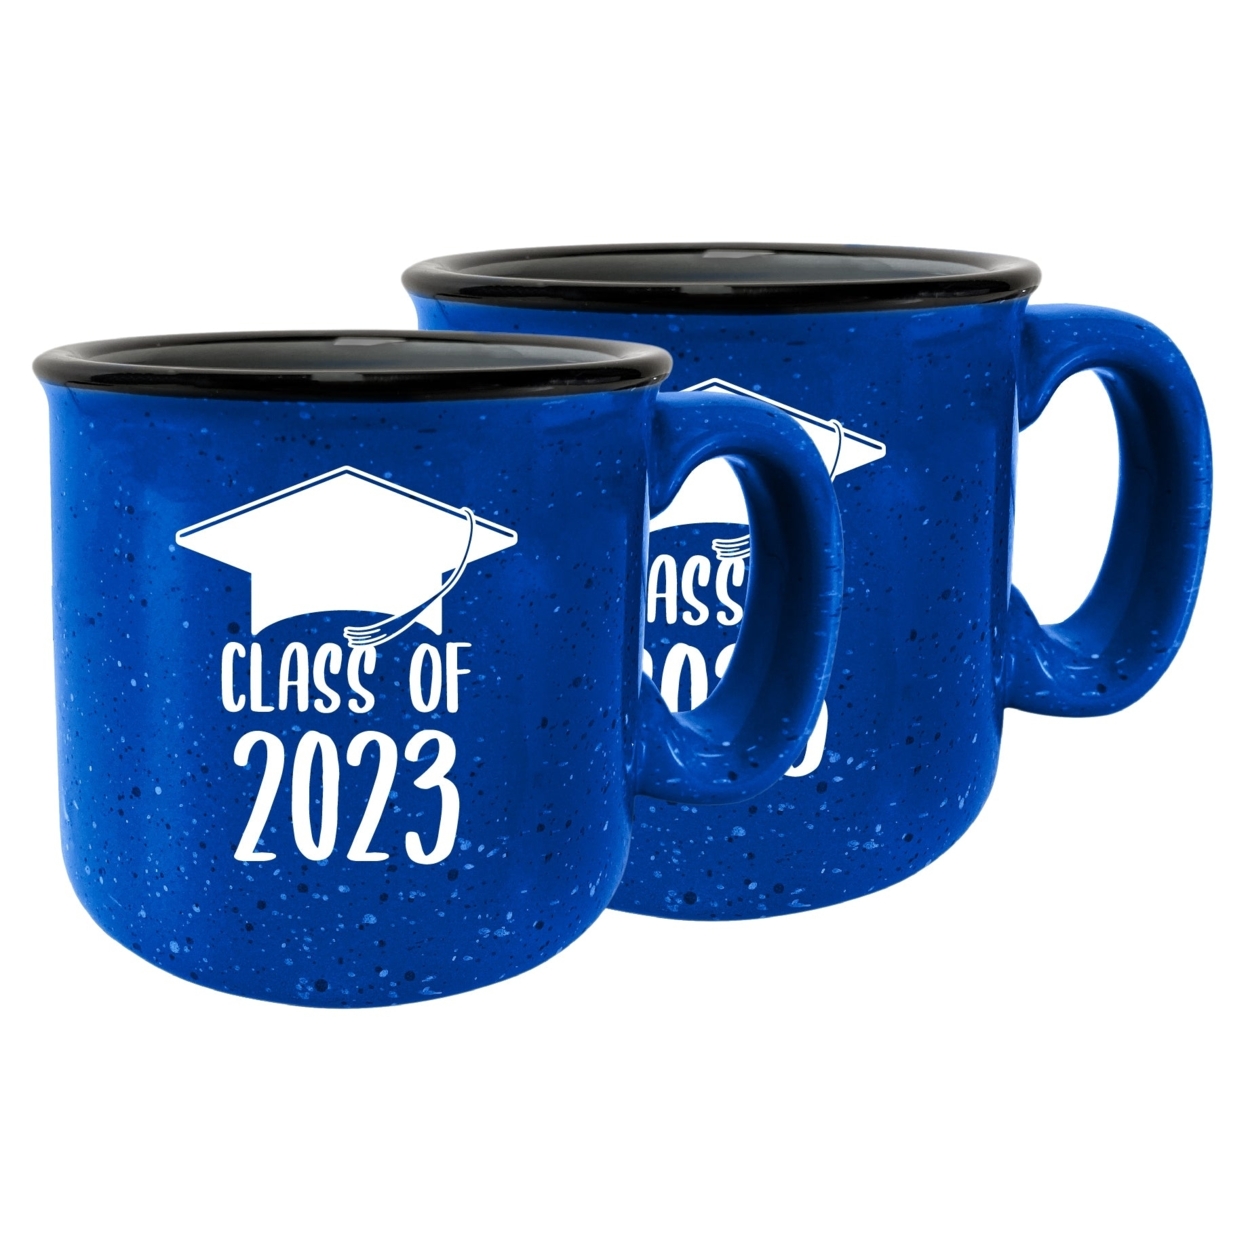 Class Of 2023 Grad Speckled Ceramic Camper Coffee Mug 16oz - Black, 2-Pack